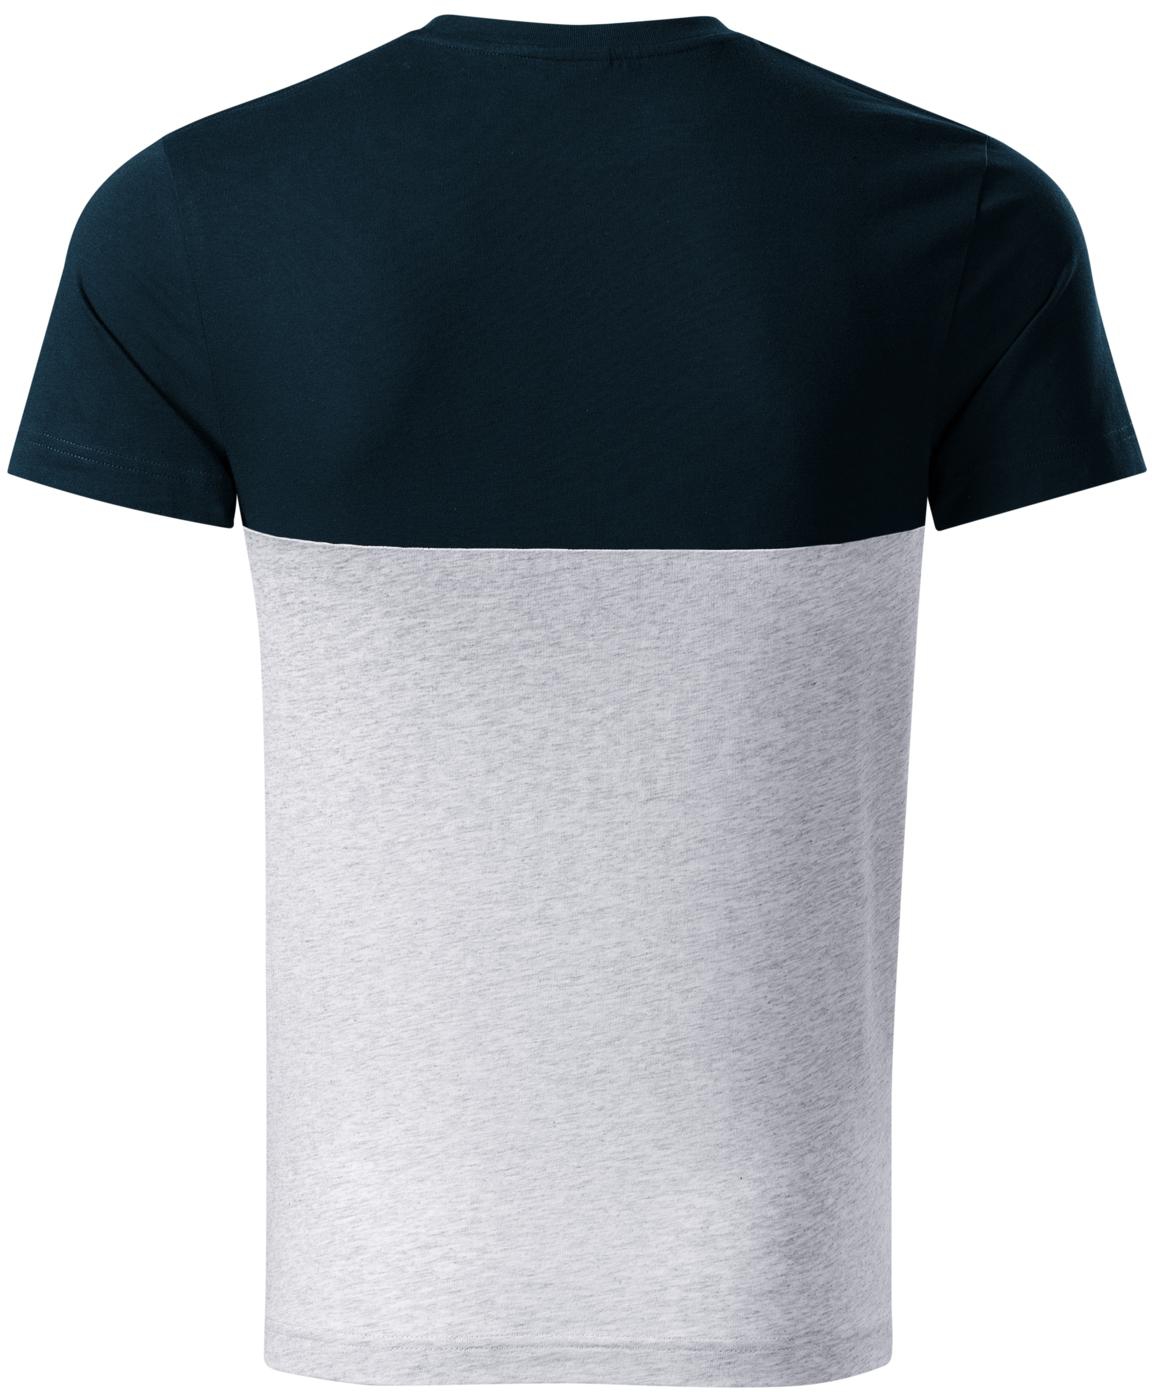 MALFINI T-Shirt Connection 177